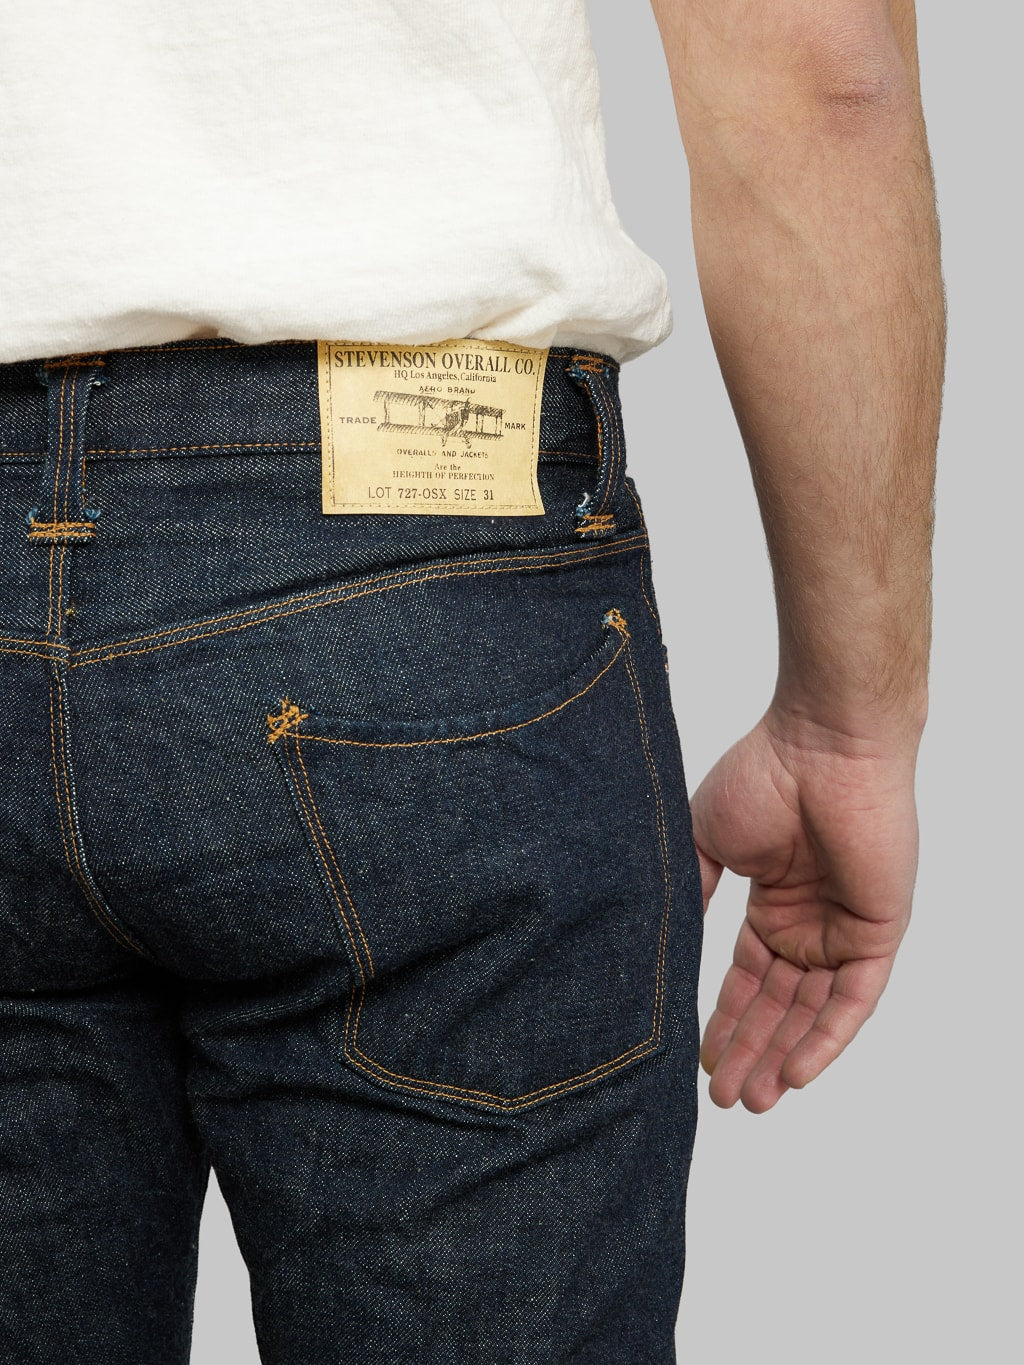 Stevenson Overall La Jolla 727 Slim Tapered Jeans  back pocket details